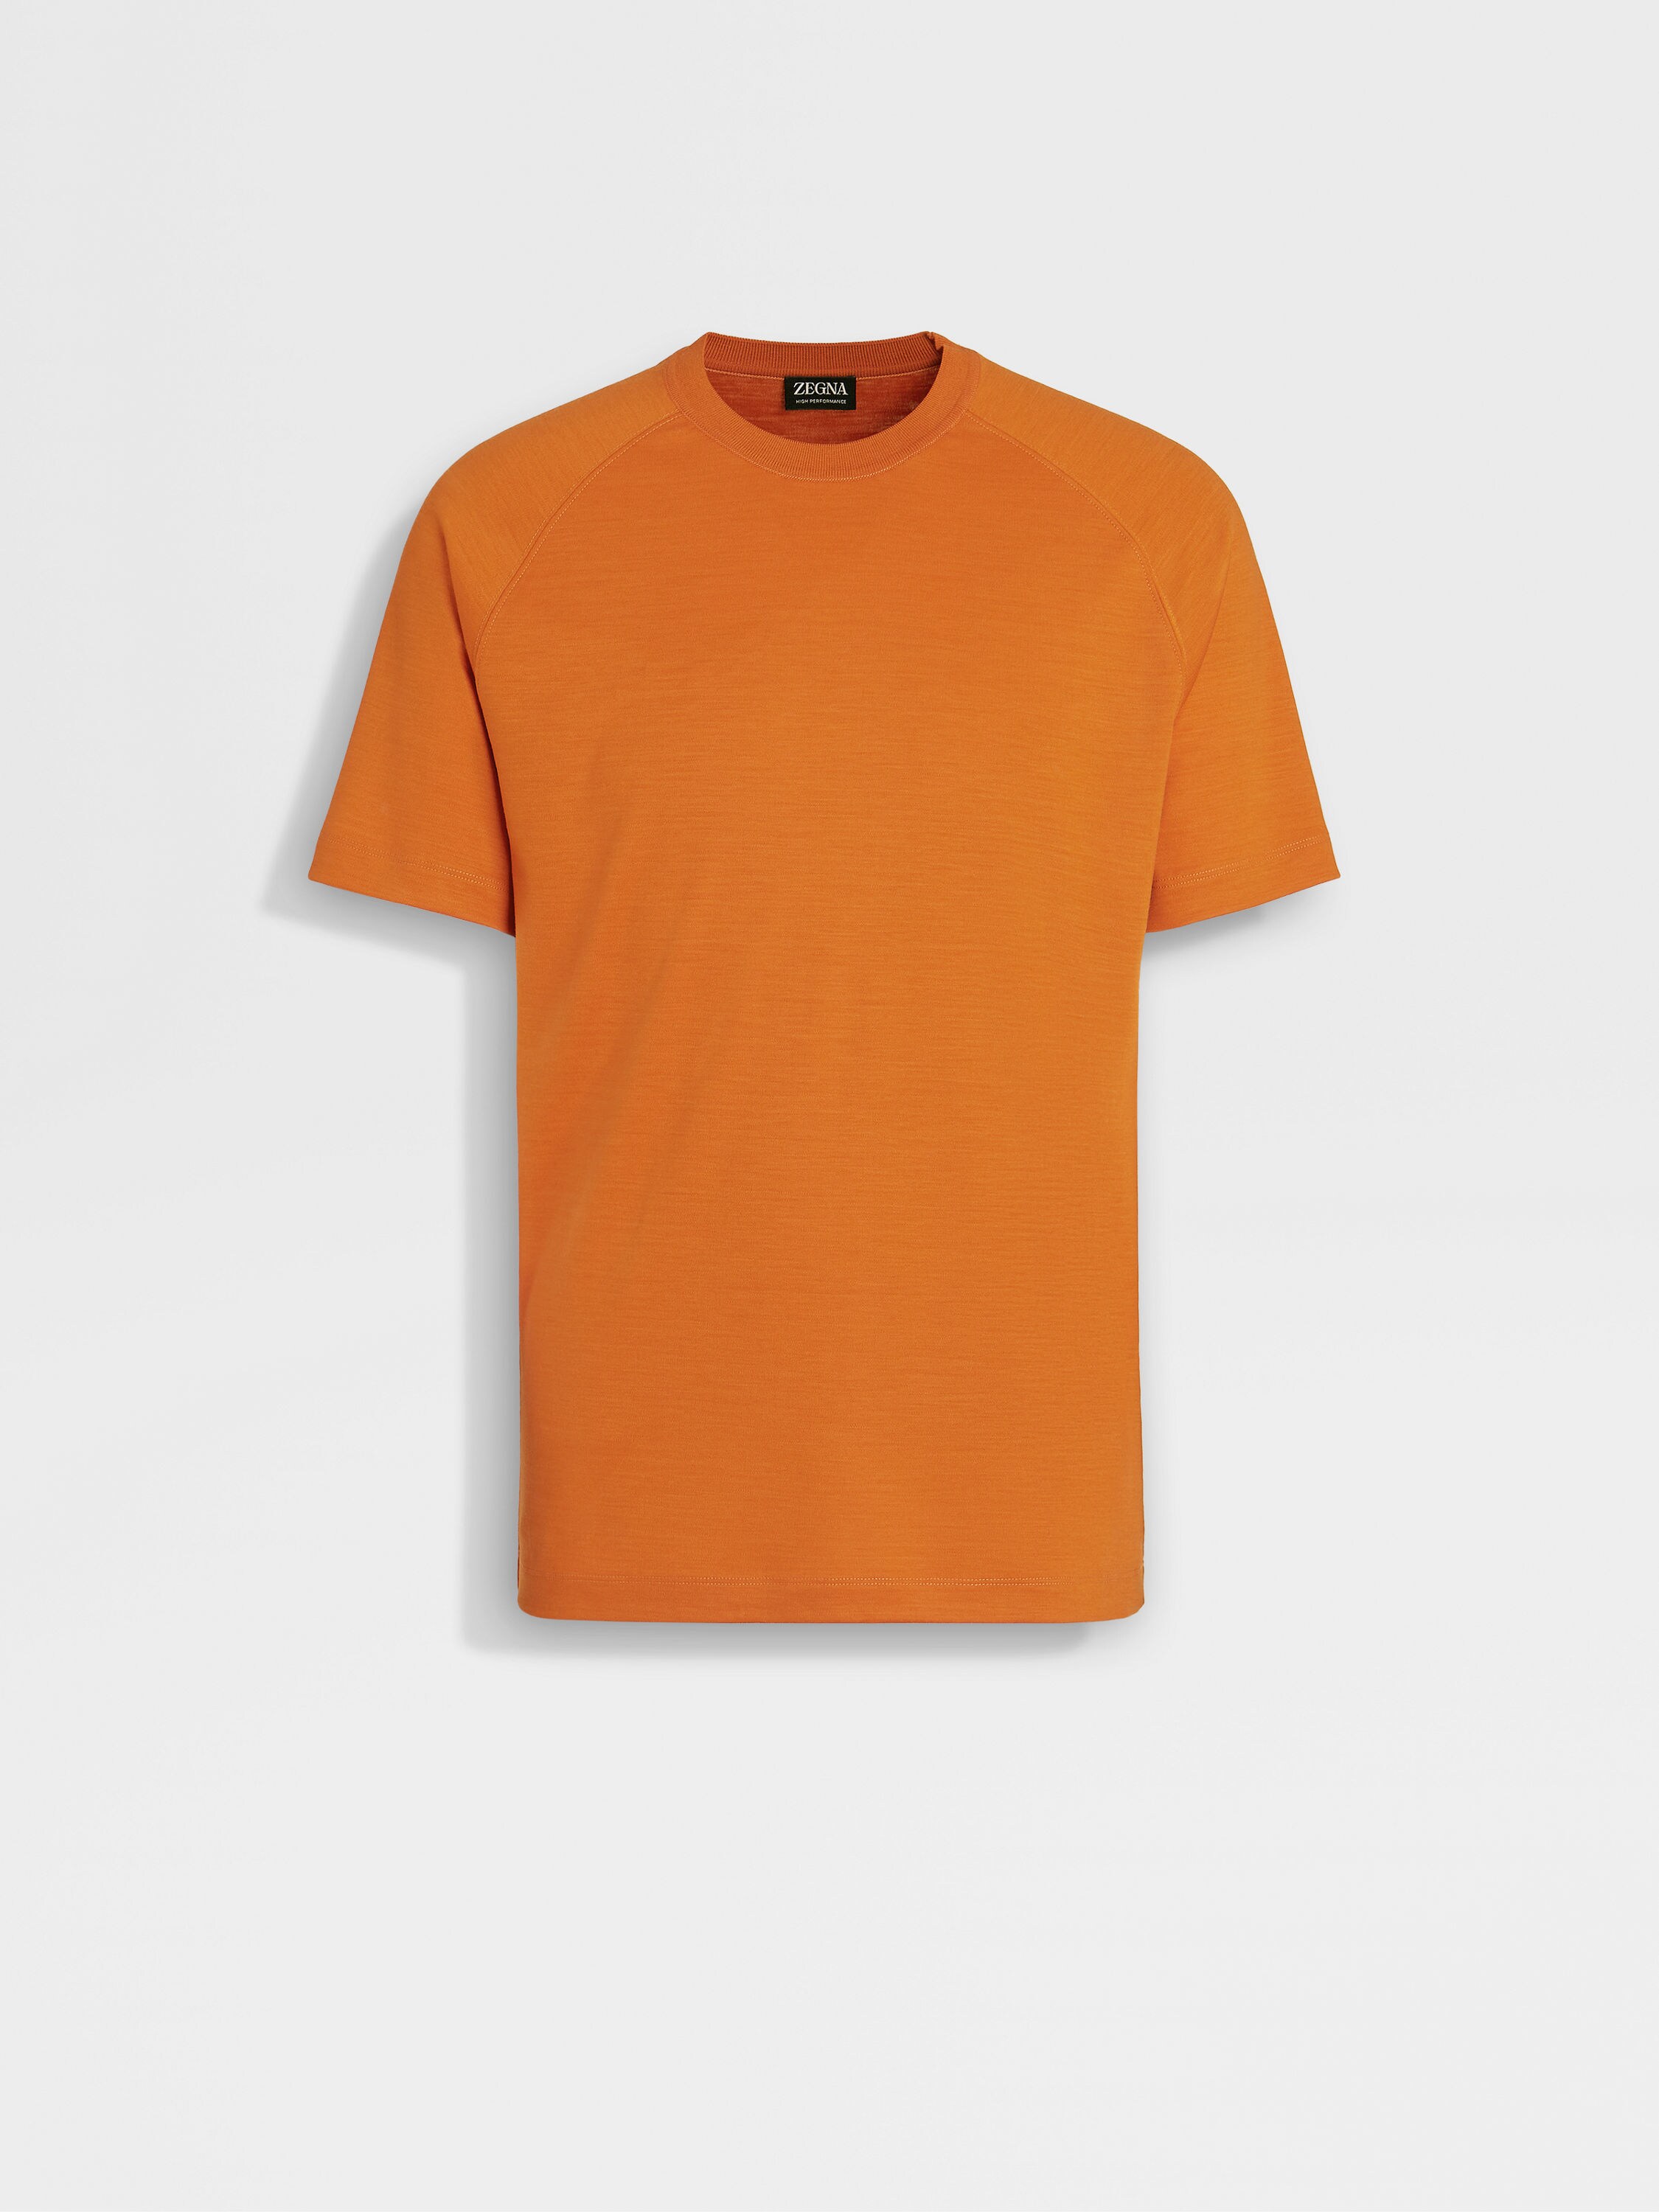 Bright Orange High Performance™ Wool T-shirt